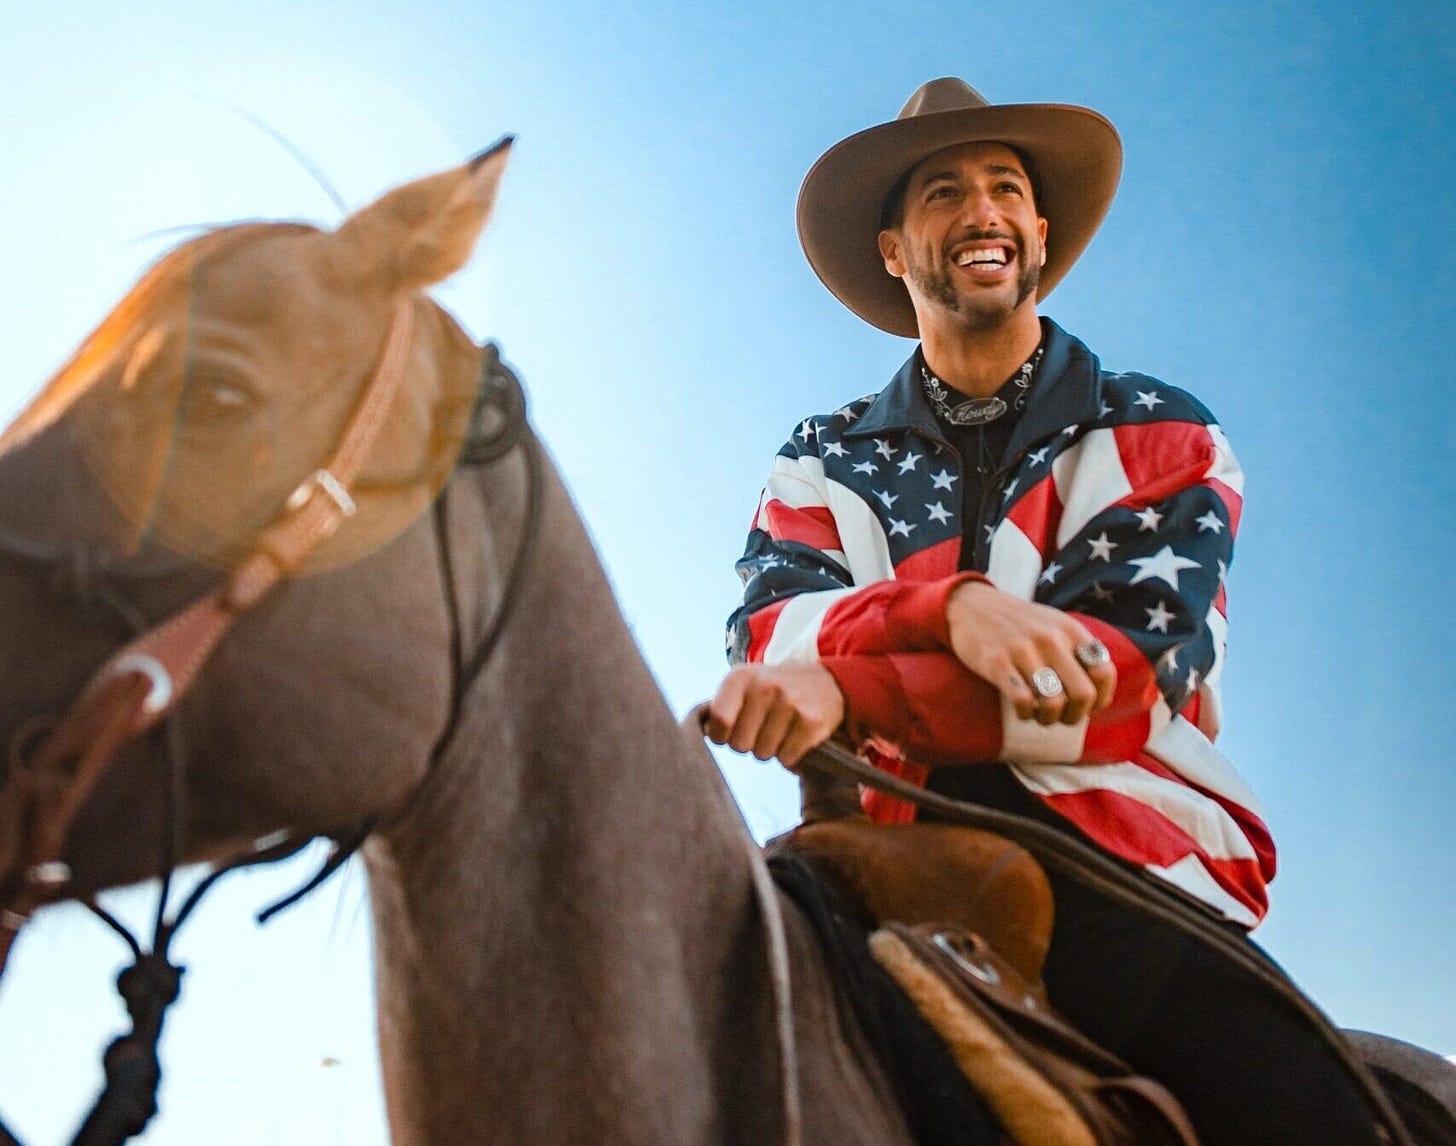 US GP: Daniel Ricciardo arrives in style on horseback